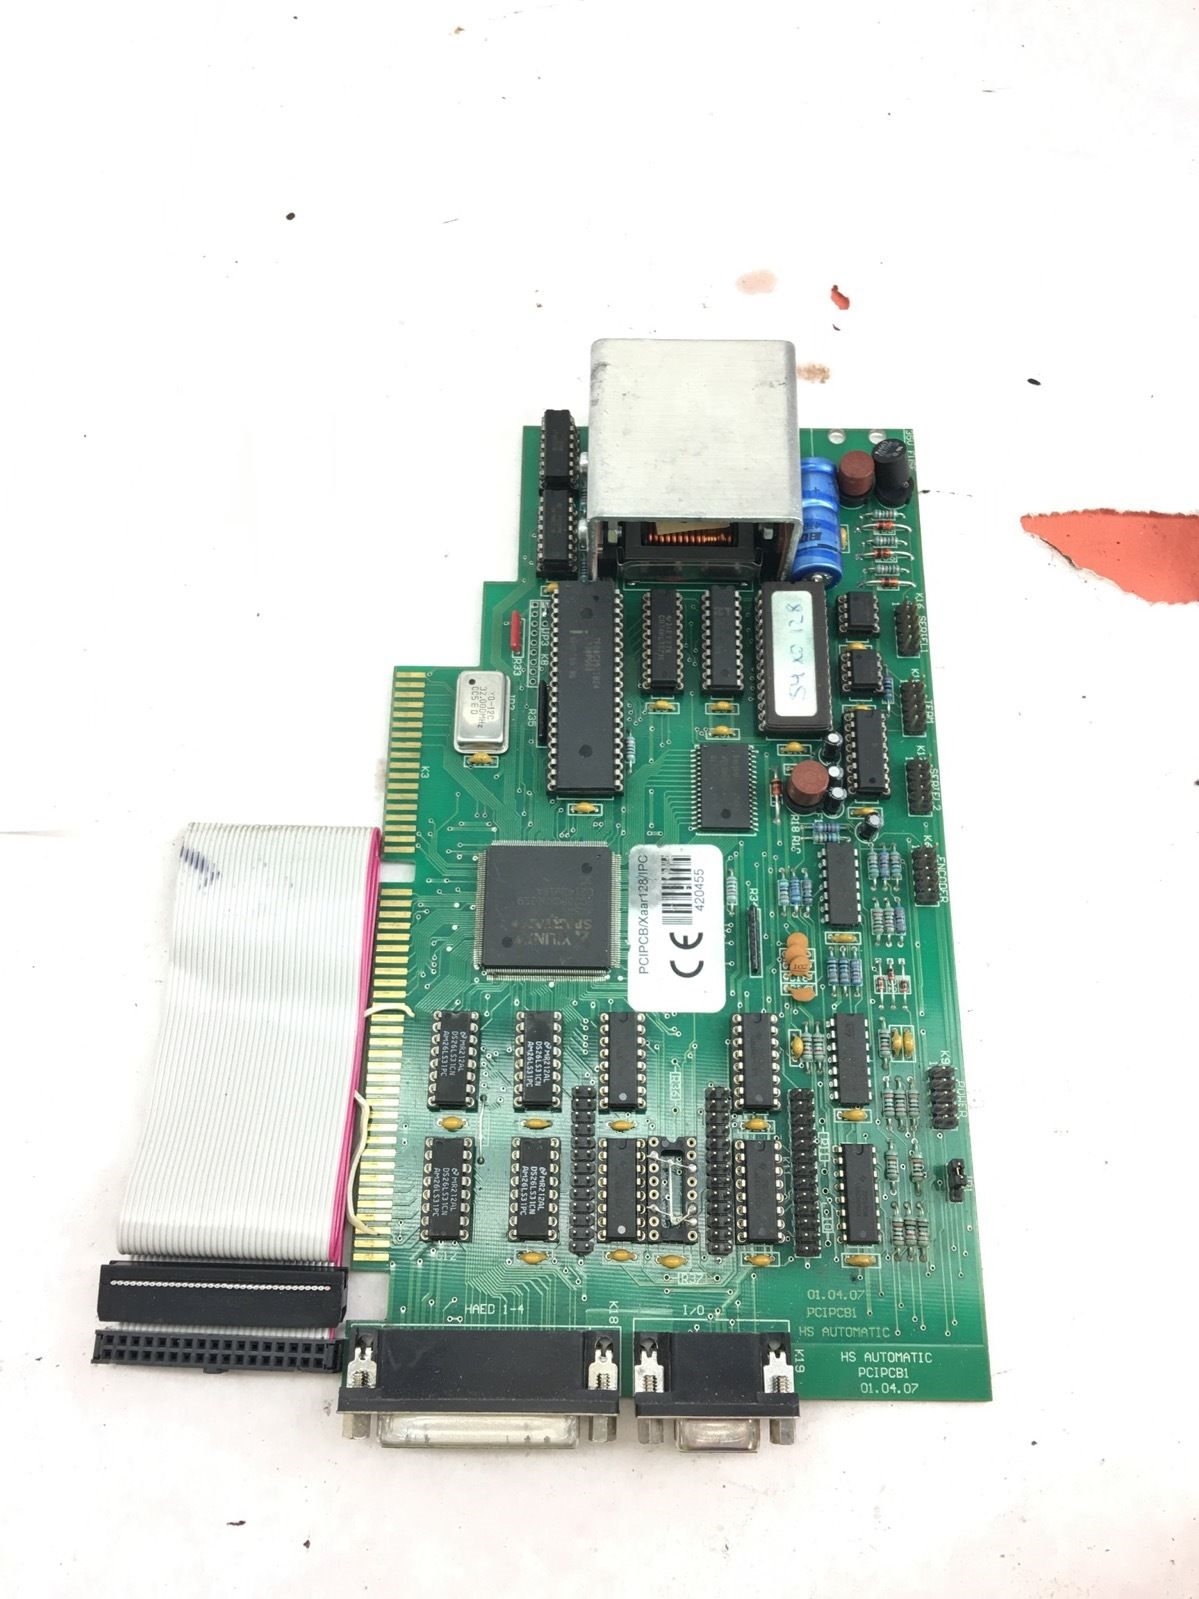 USED GREAT CONDITION HS AUTOMATICÂ PCI PCB1 PC BOARD, PCIPCB/Xaar128/IPC, (B360) 1